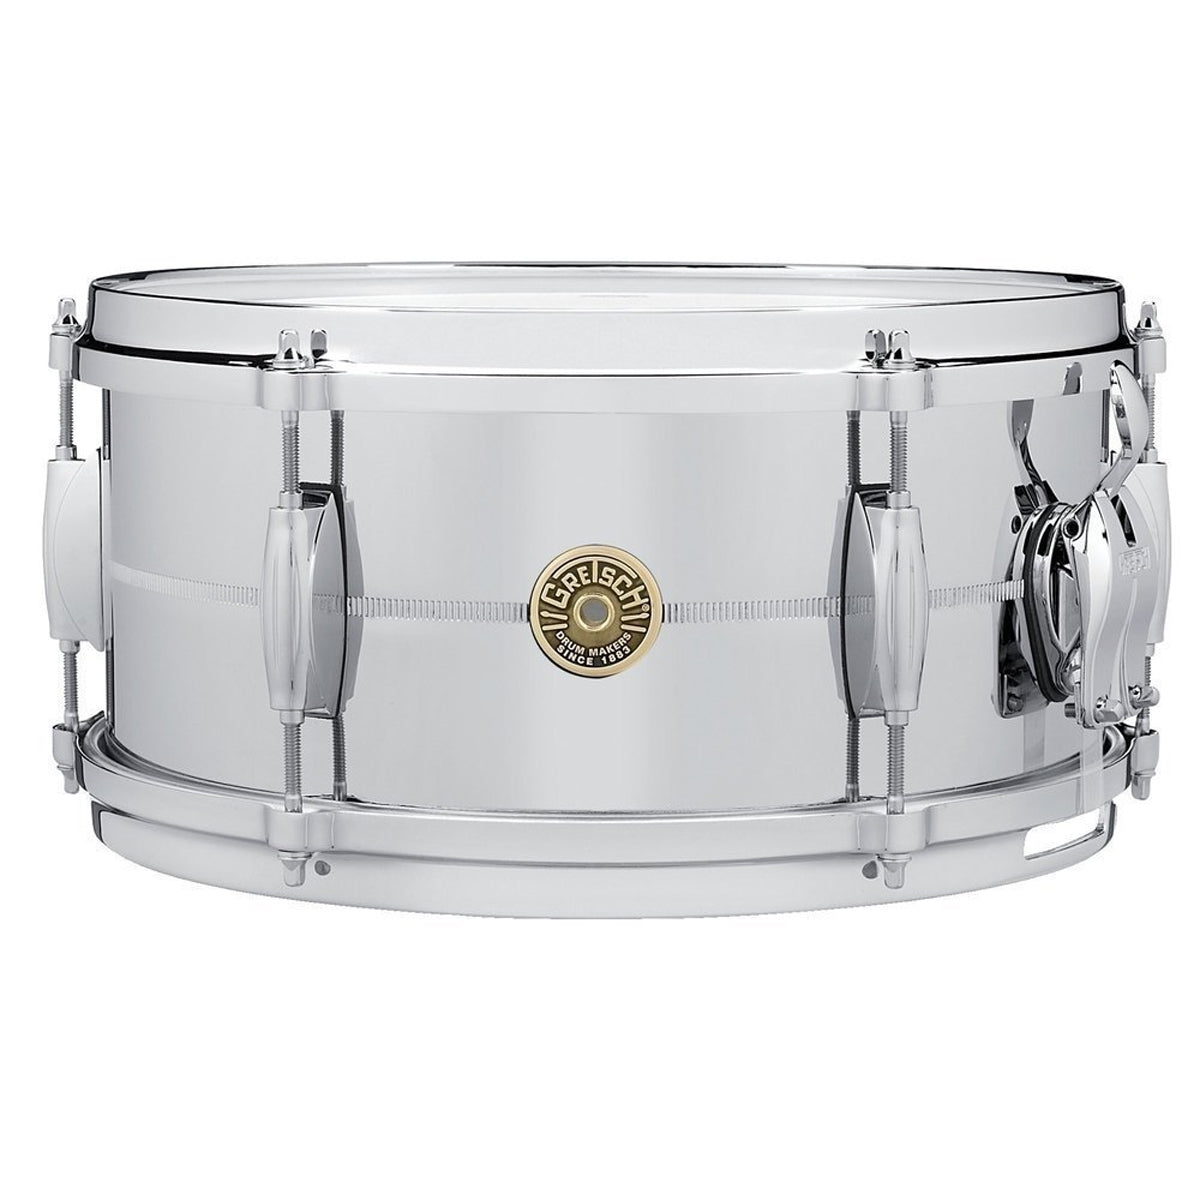 Gretsch USA Chrome Over Brass 13" x 6" Snare Drum